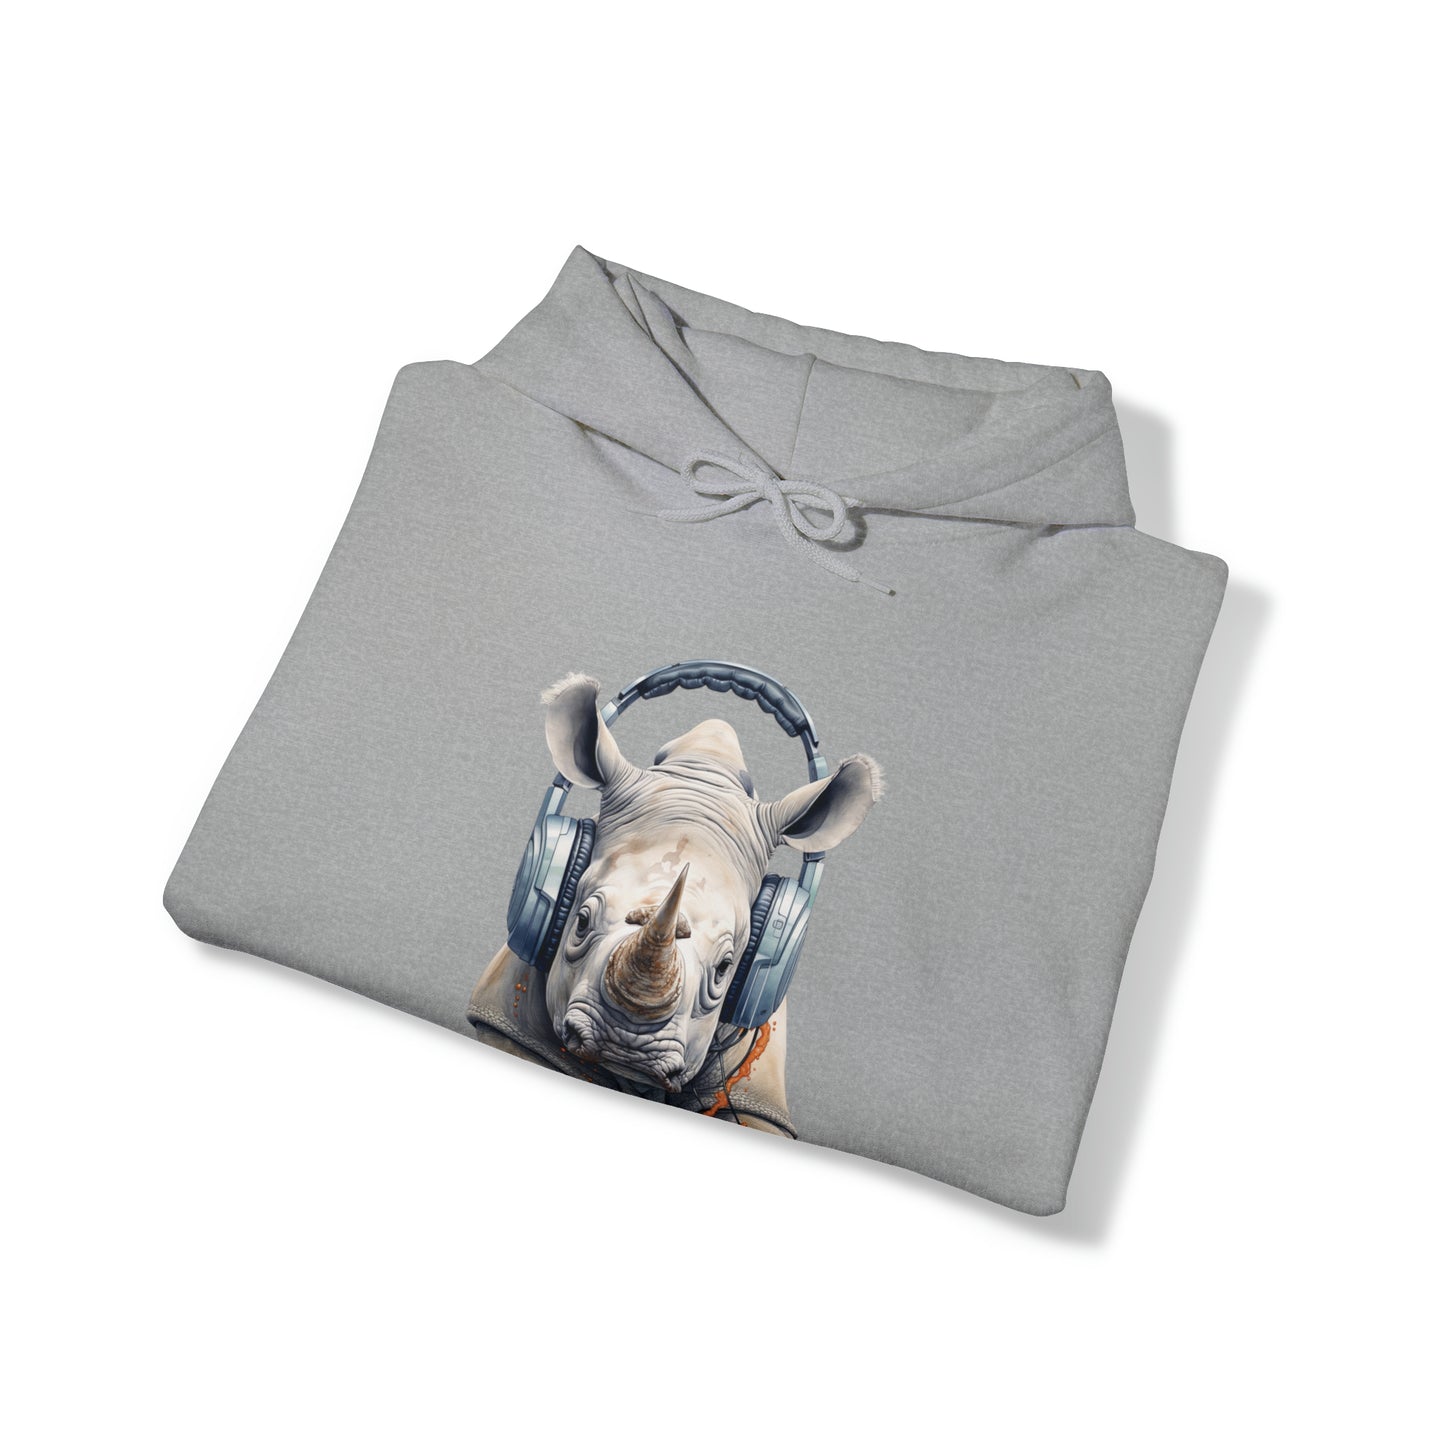 Rhino Headphones | Unisex Heavy Blend™ Hooded Sweatshirt